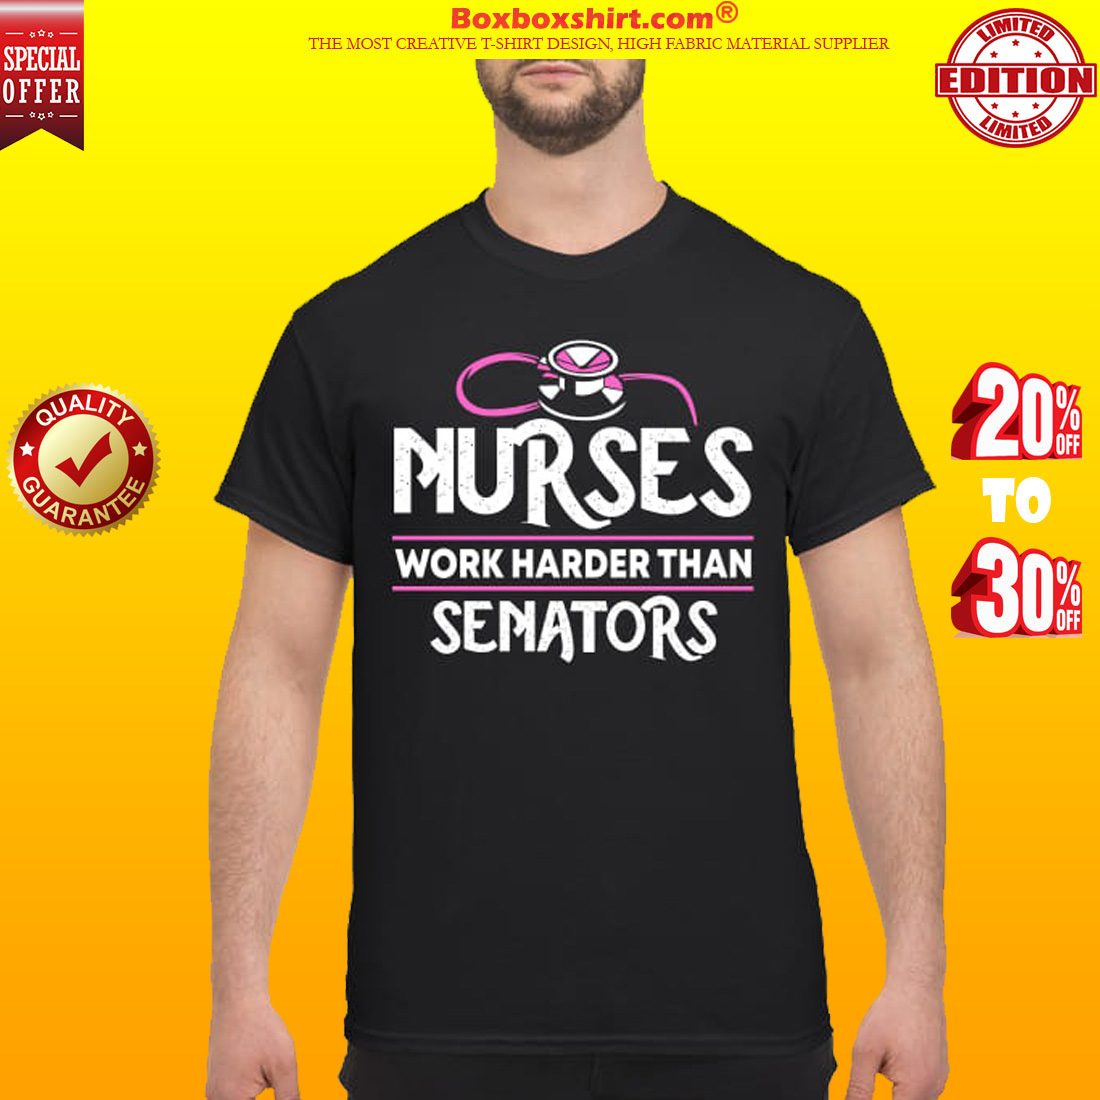 Nurses work harder than senators classic shirt